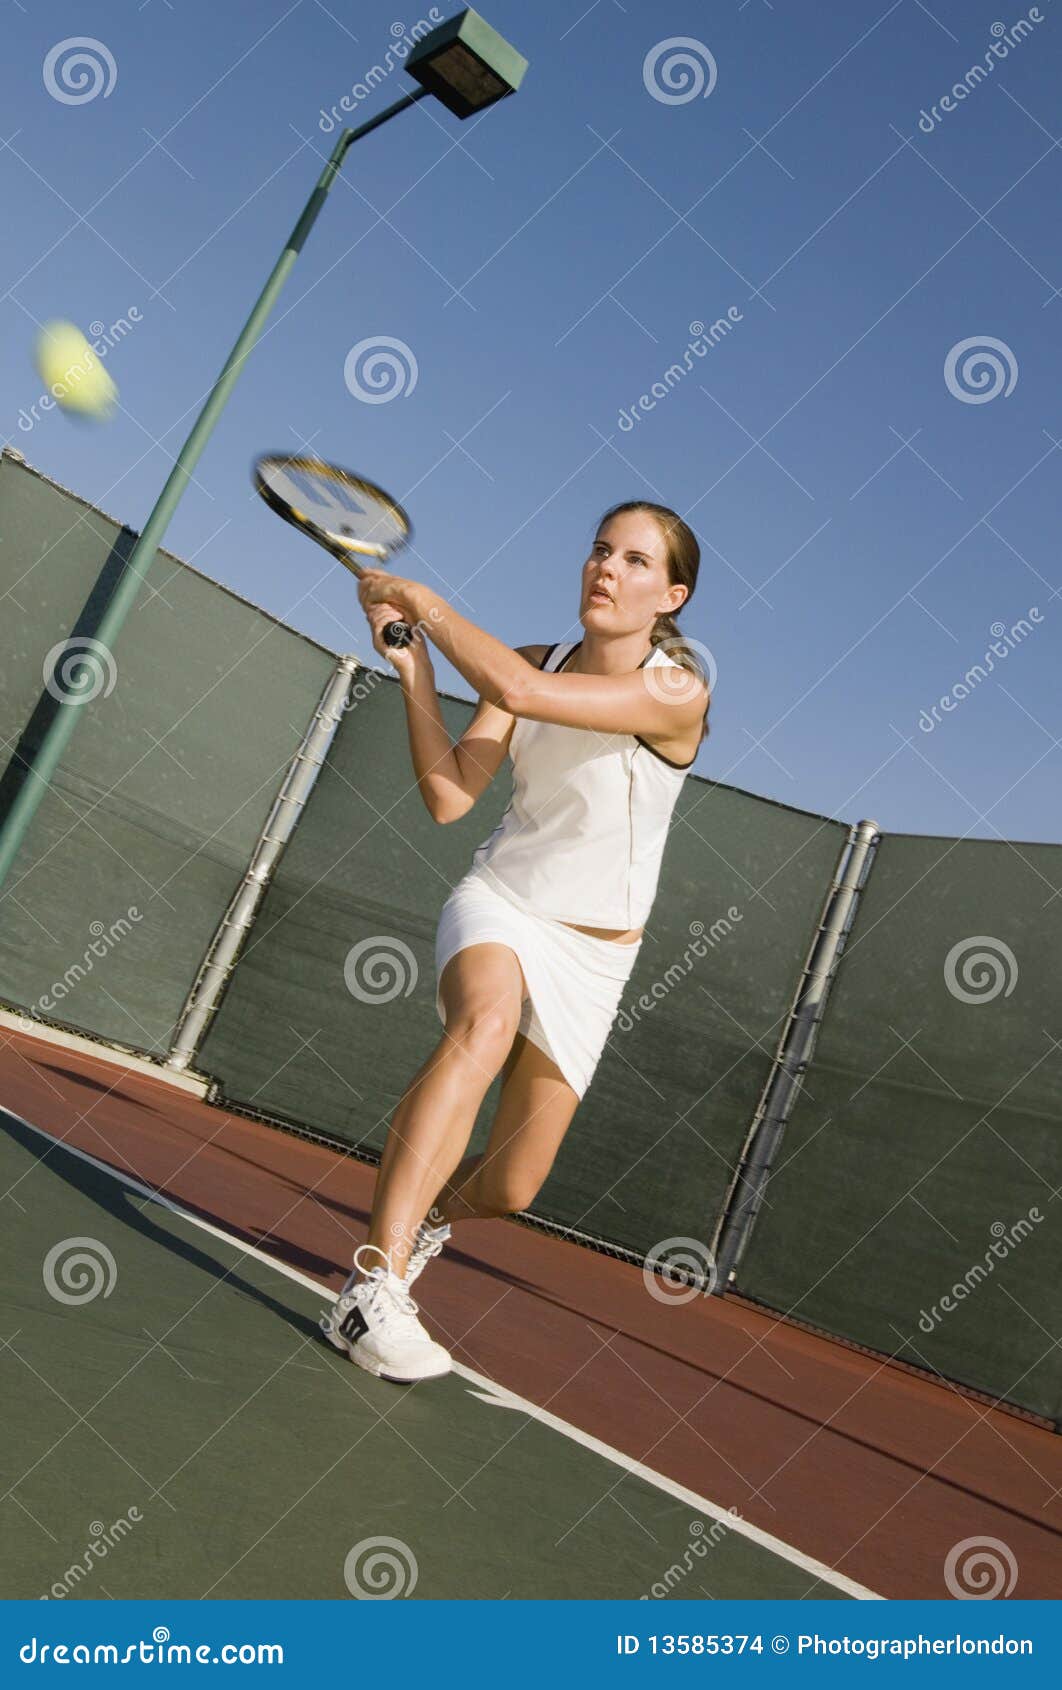 tennis player hitting backhand on tennis court